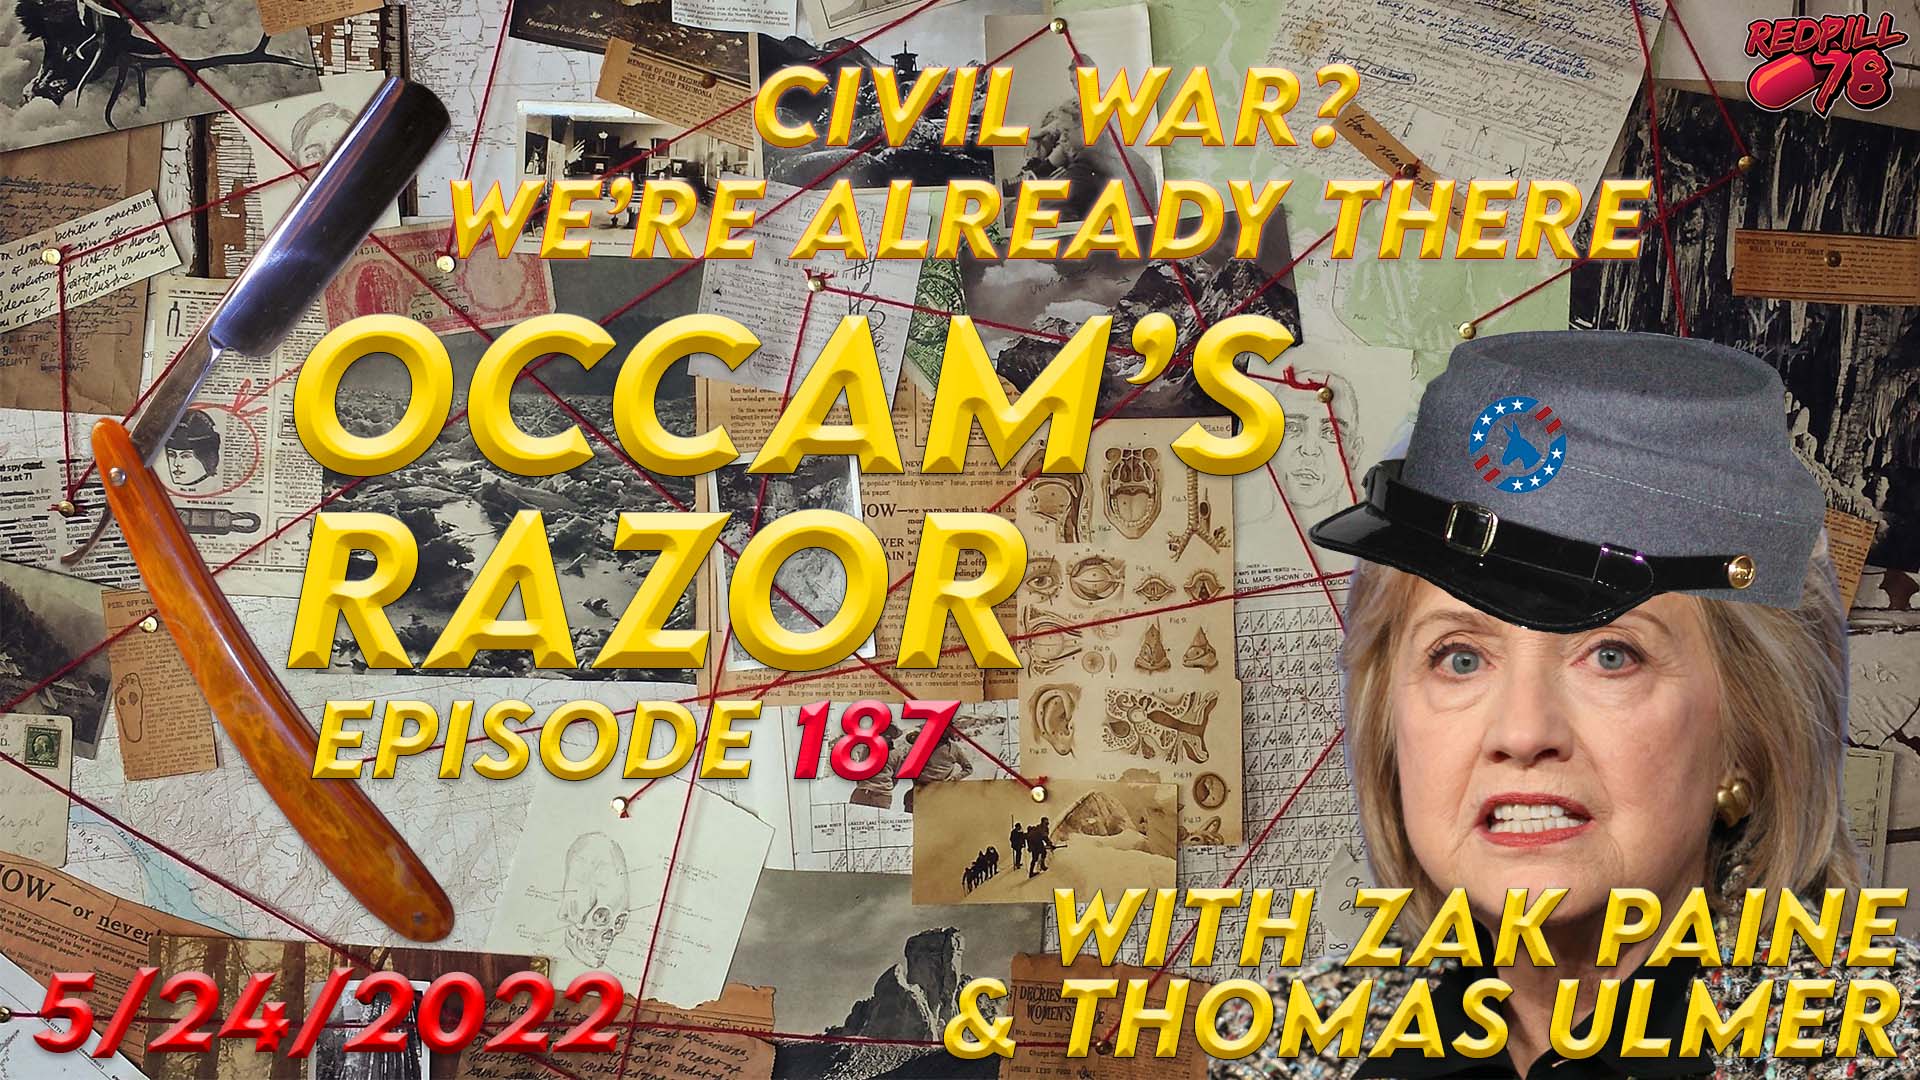 The Civil War Has Already Begun - Occam's Razor Ep. 187 with Zak Paine & Abe Thomas Ulmer